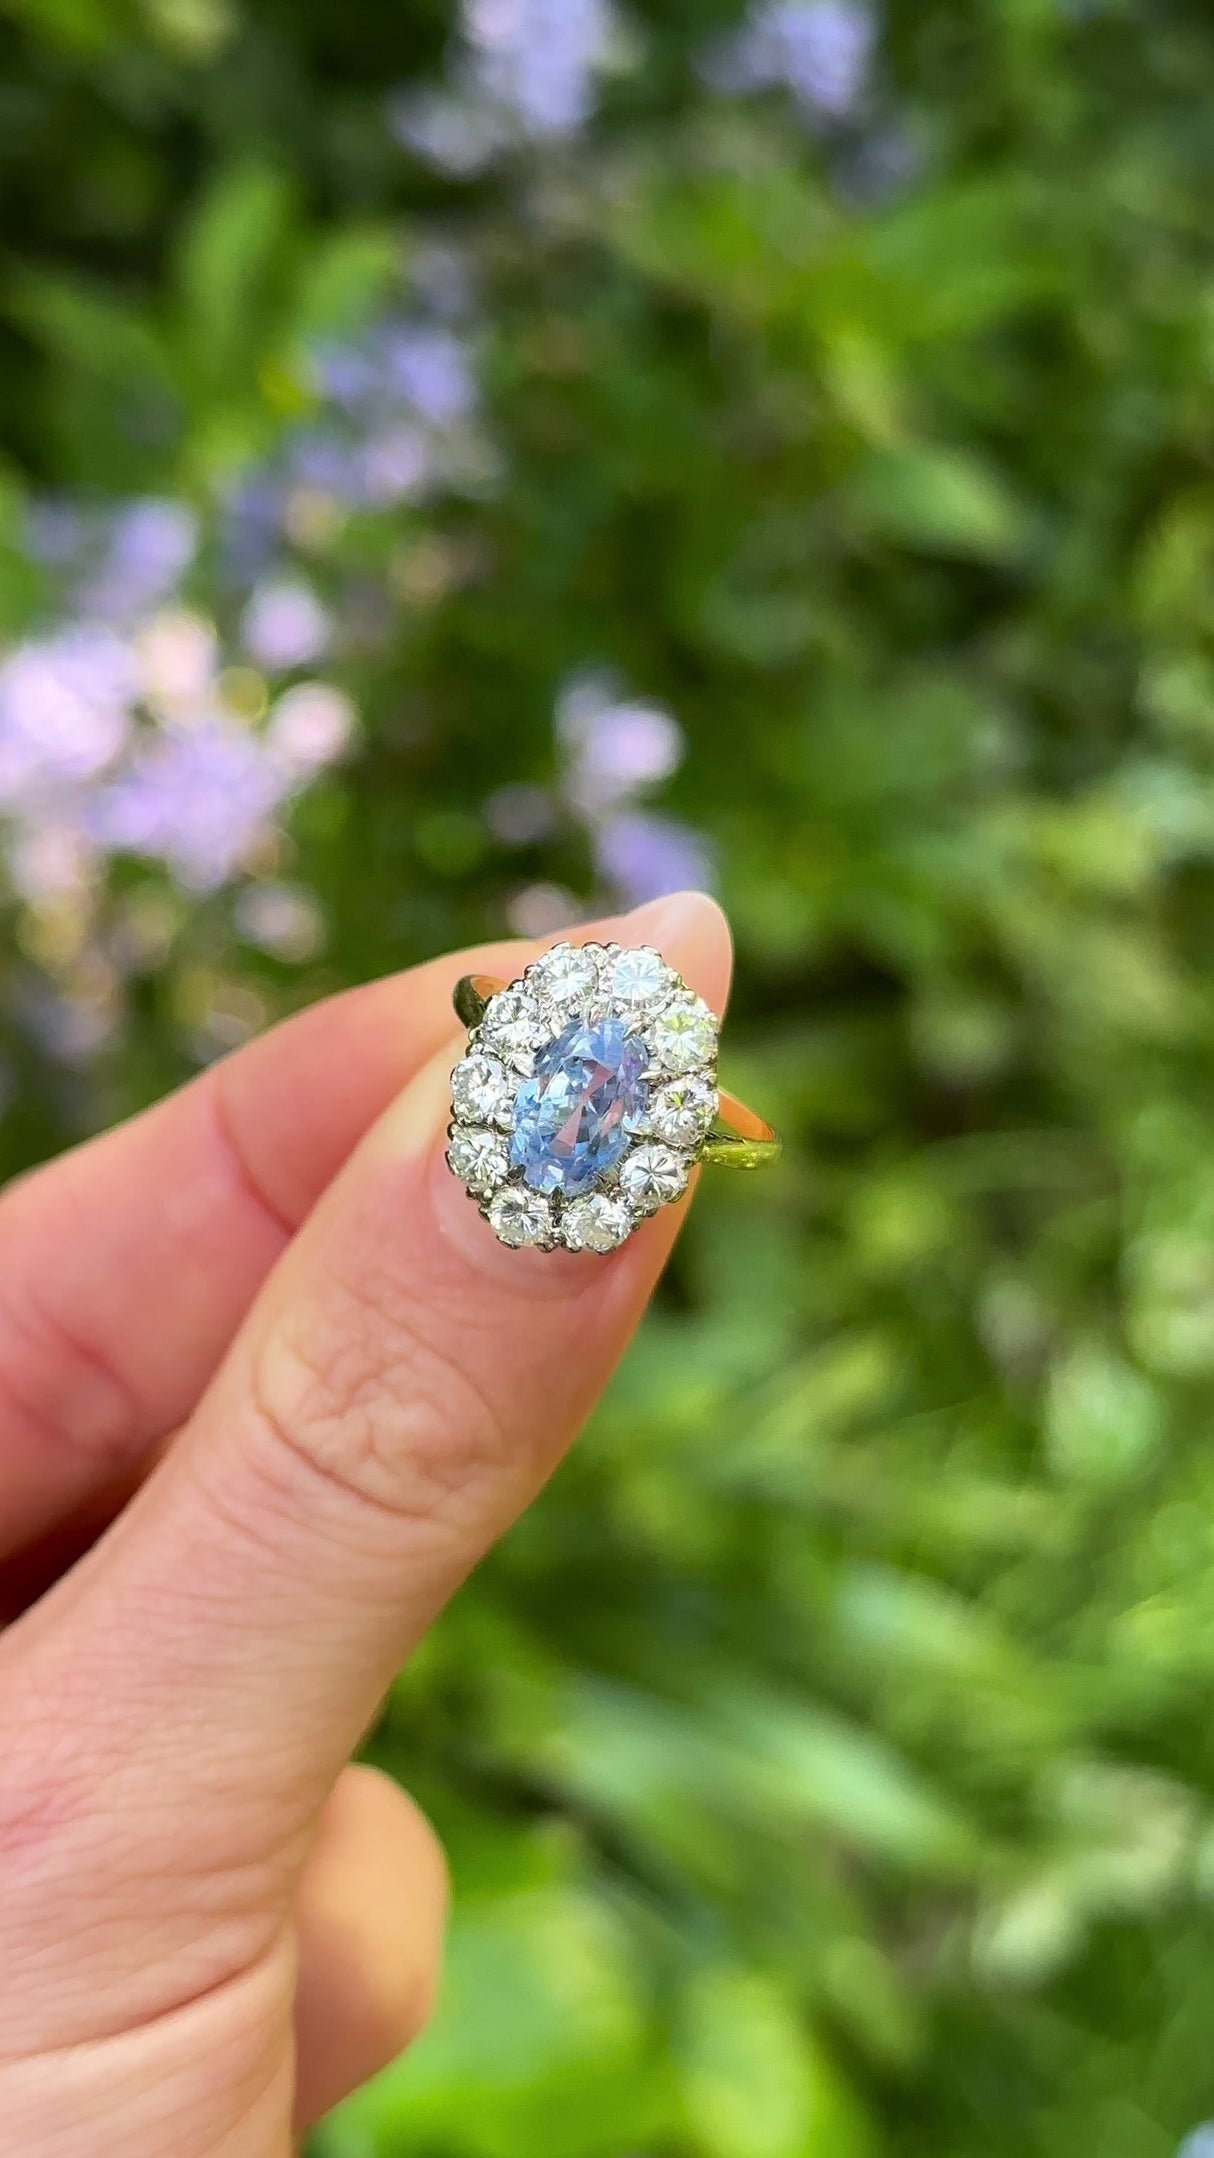 Vintage, 1980s cornflower blue sapphire & diamond cluster ring held in fingers.